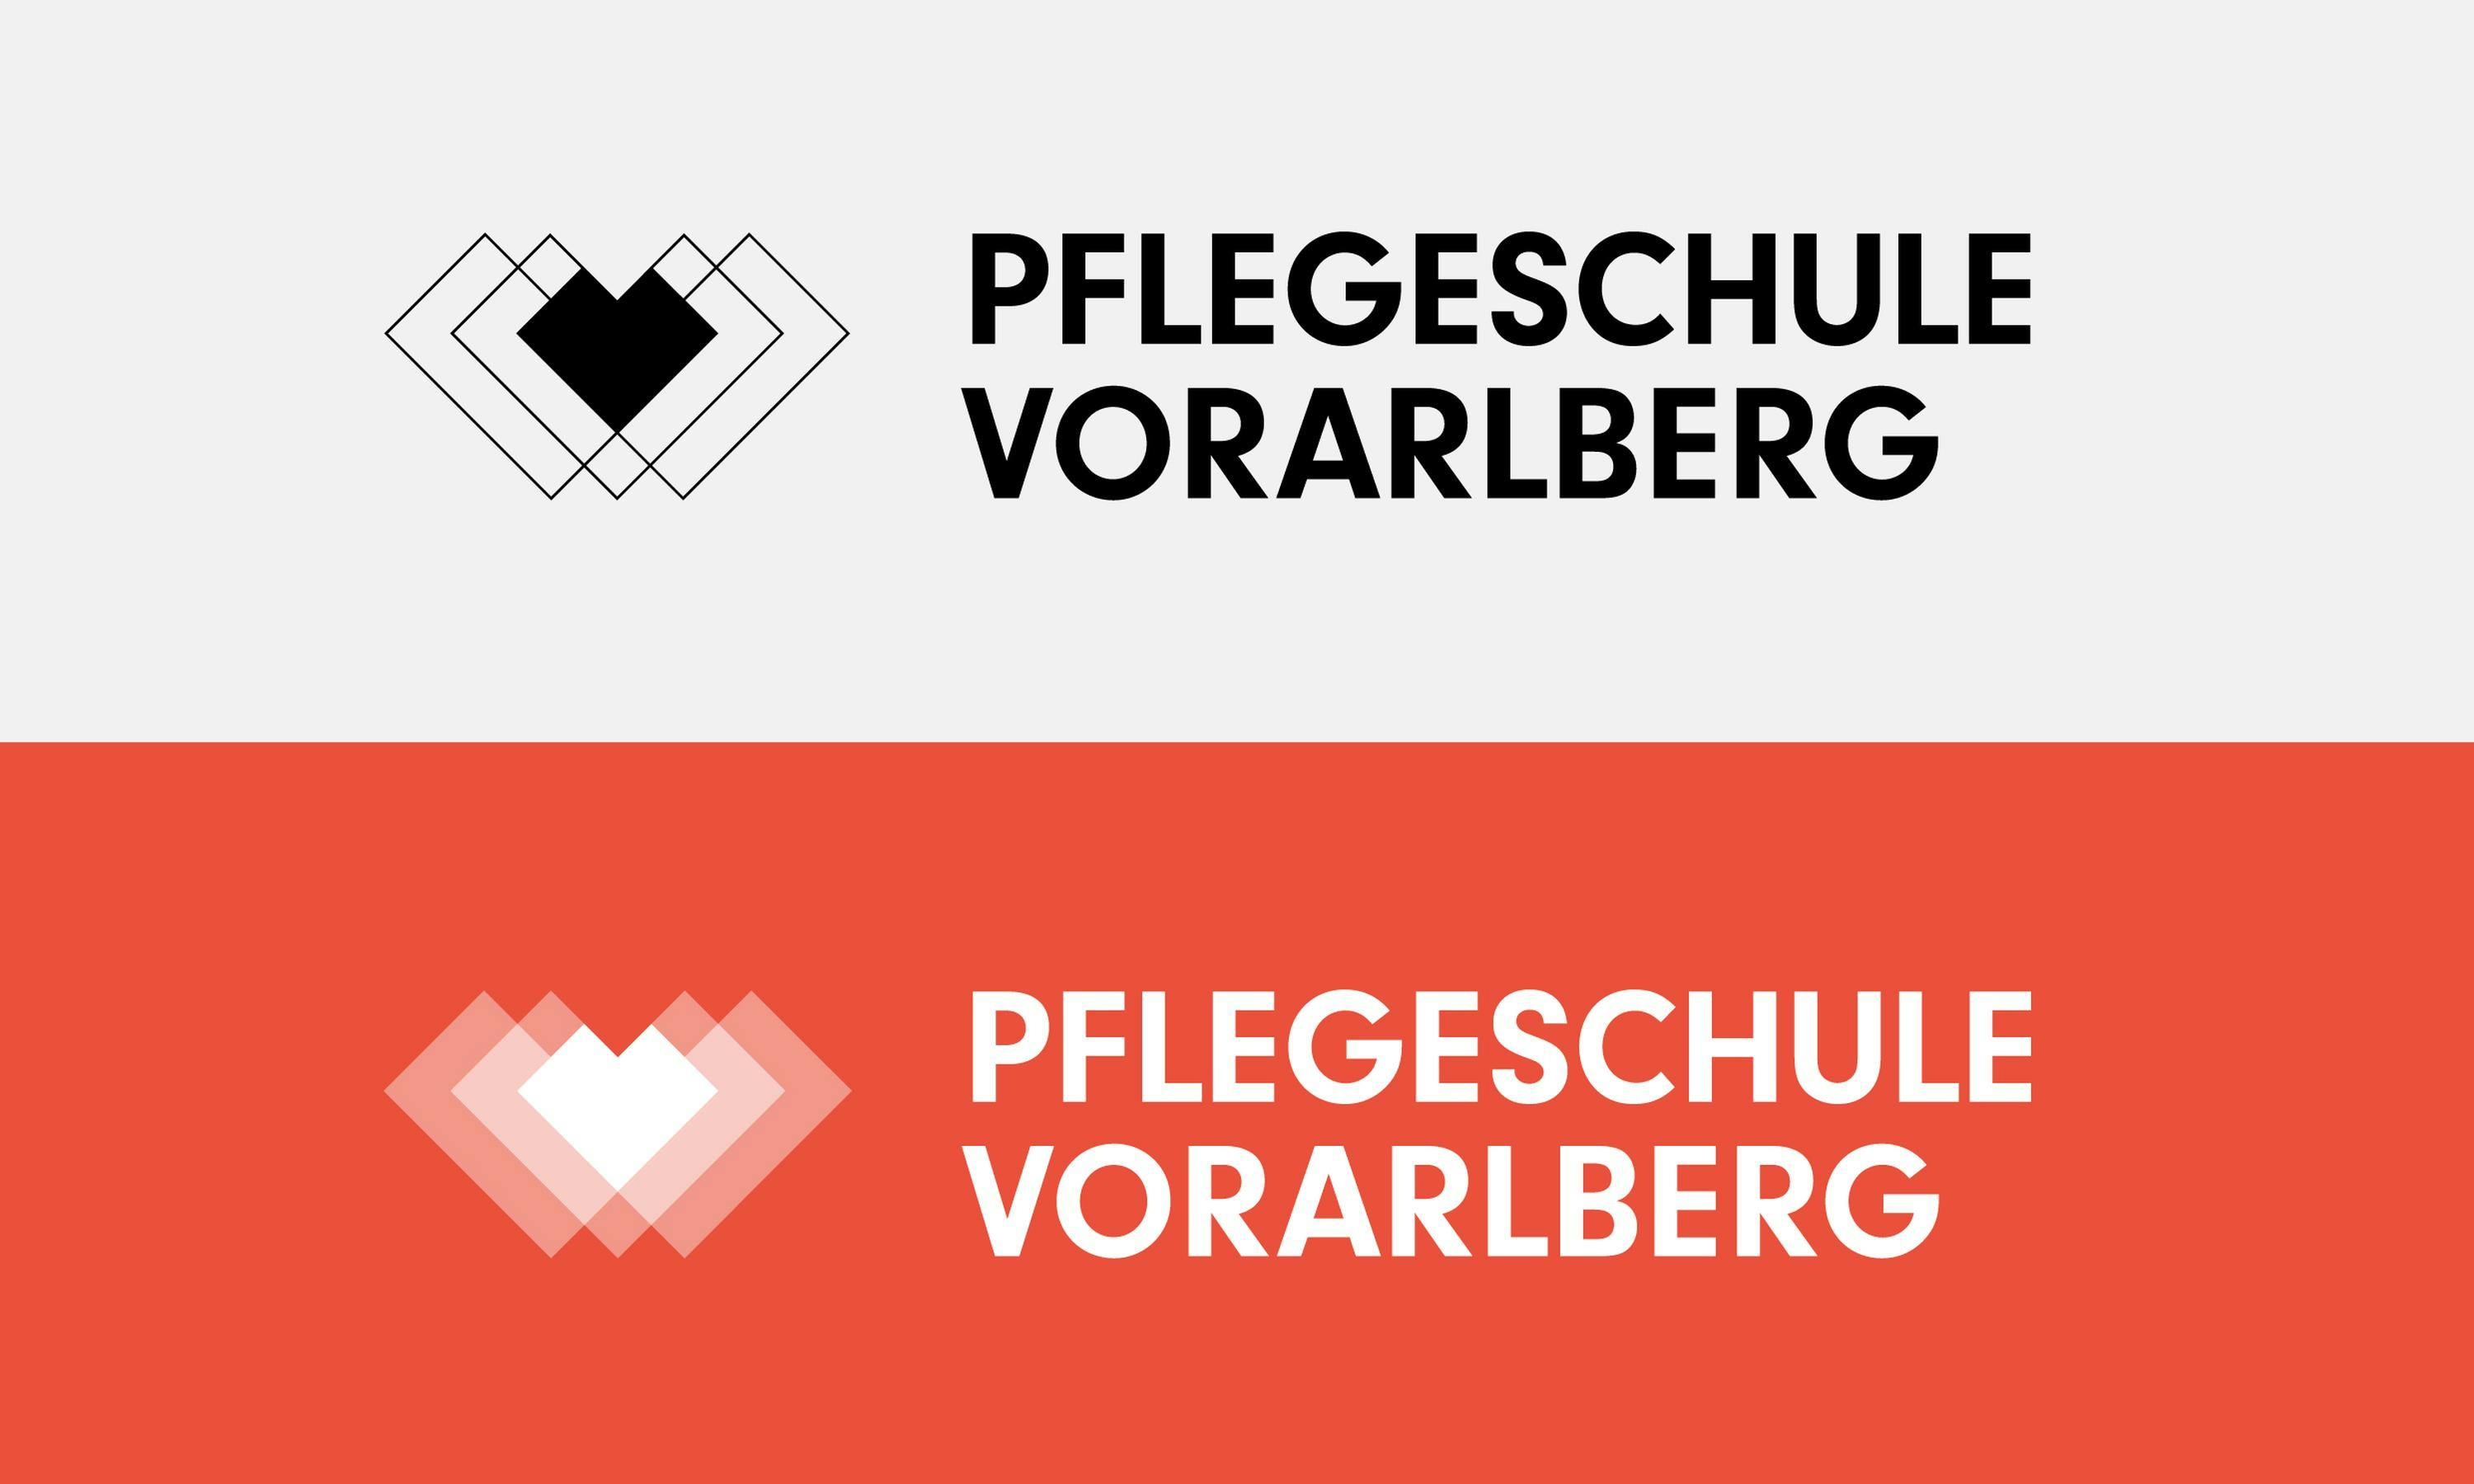 Pflegeschule Vorarlberg, Zeughaus Design © Zeughaus Design